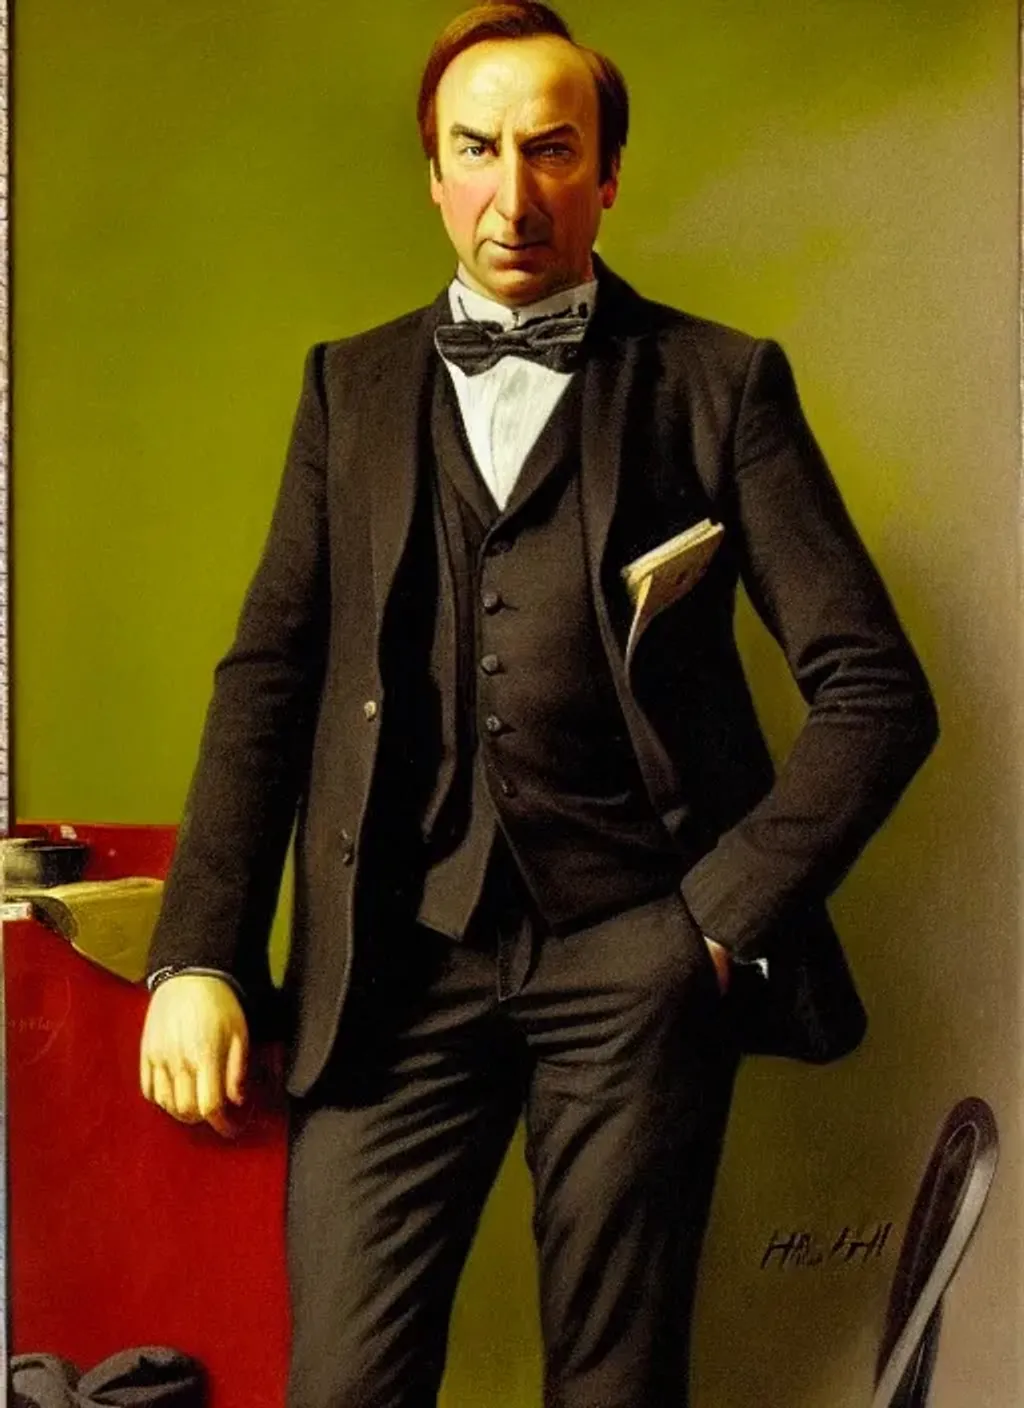 Prompt: Portrait of Saul Goodman by Adolf Hirémy-Hirschl